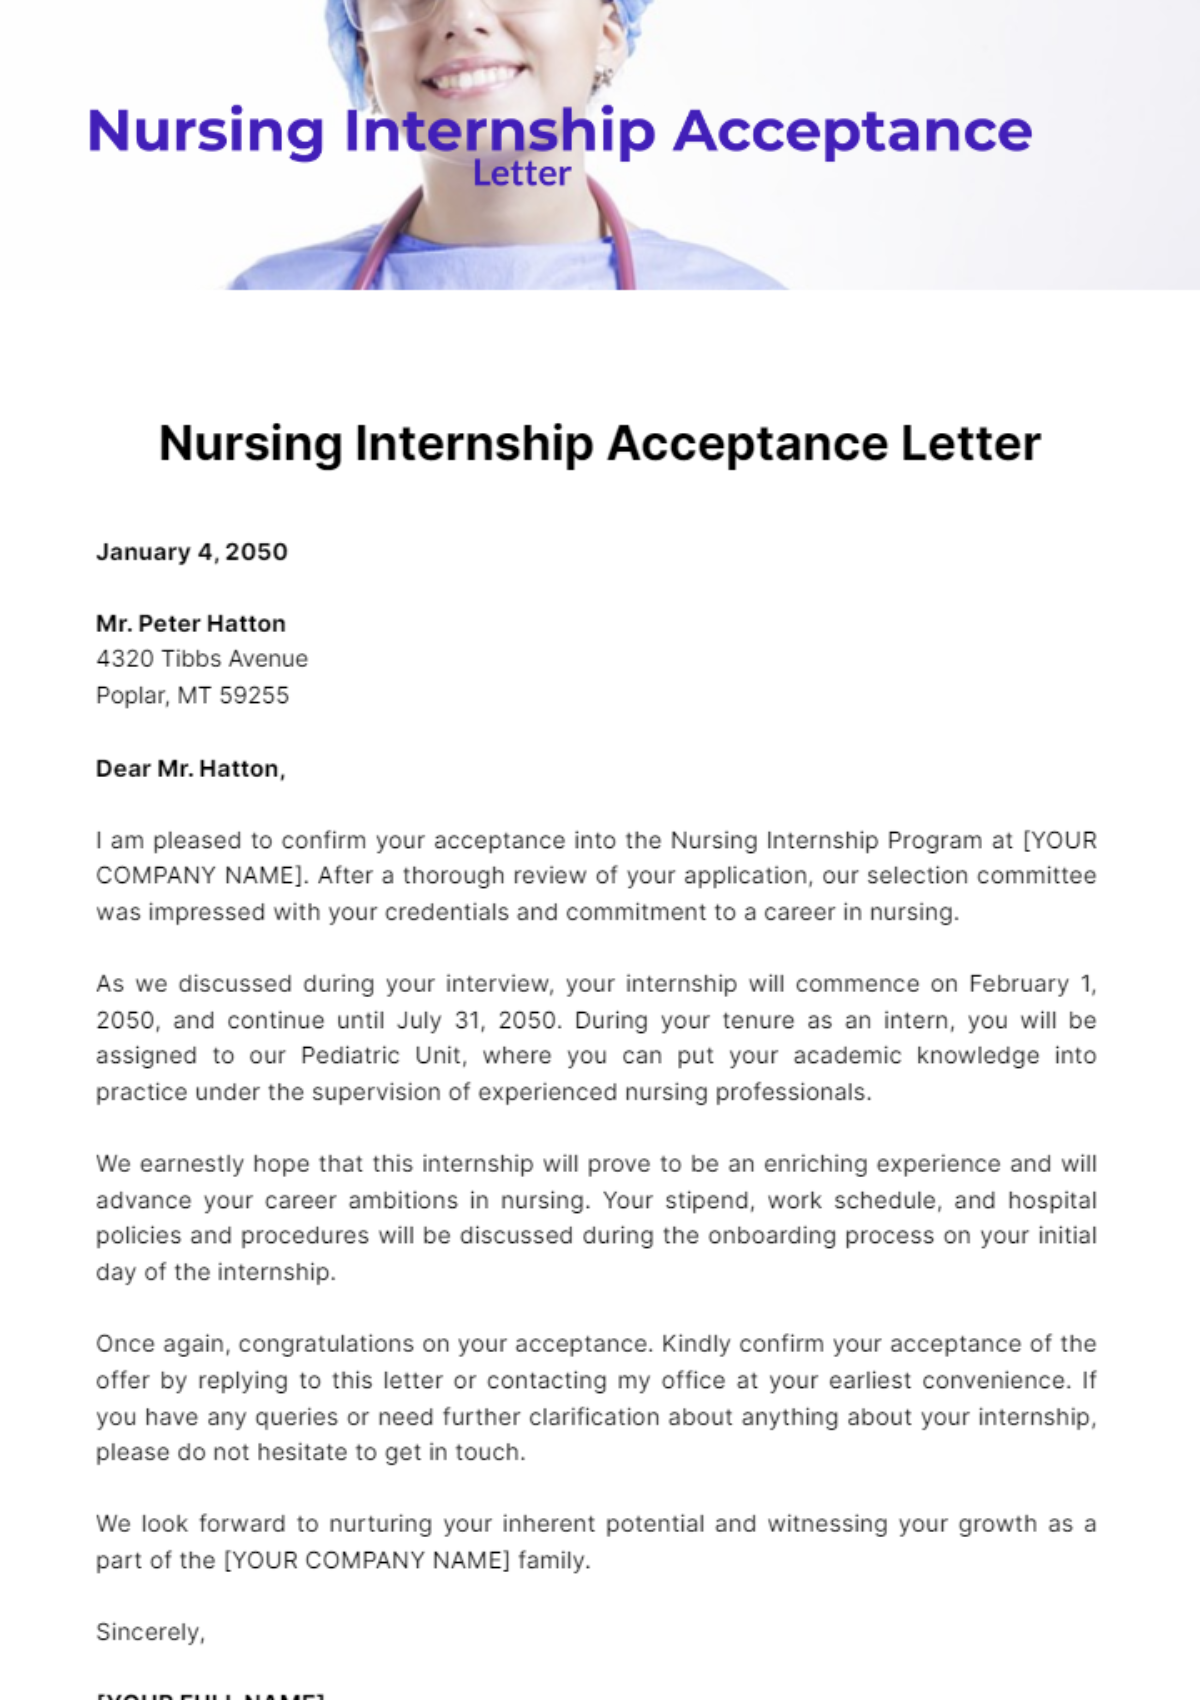 Free Nursing Internship Acceptance Letter Template